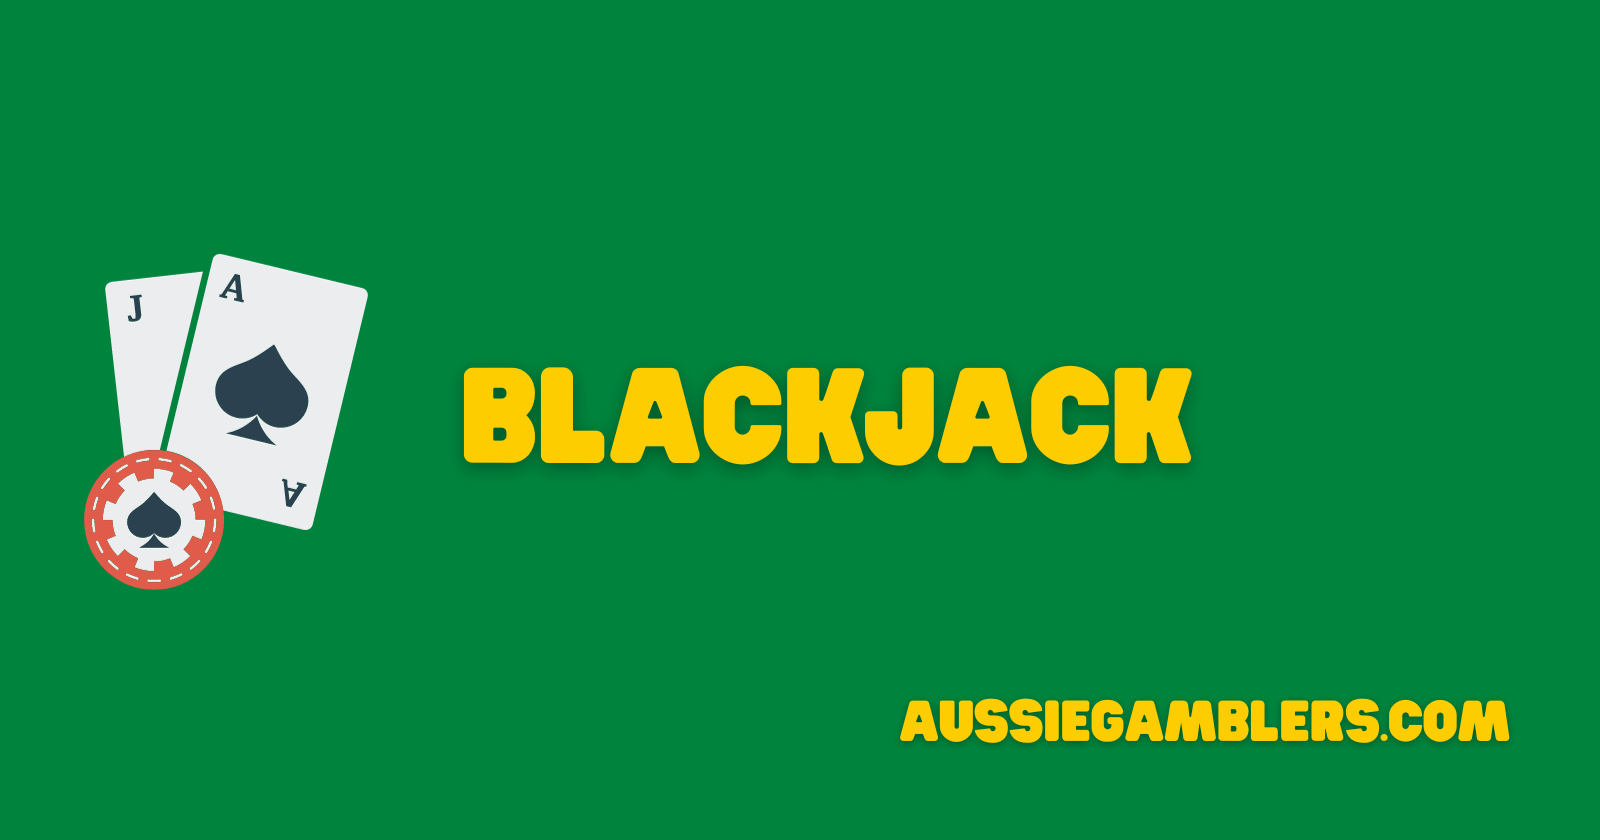 Blackjack banner